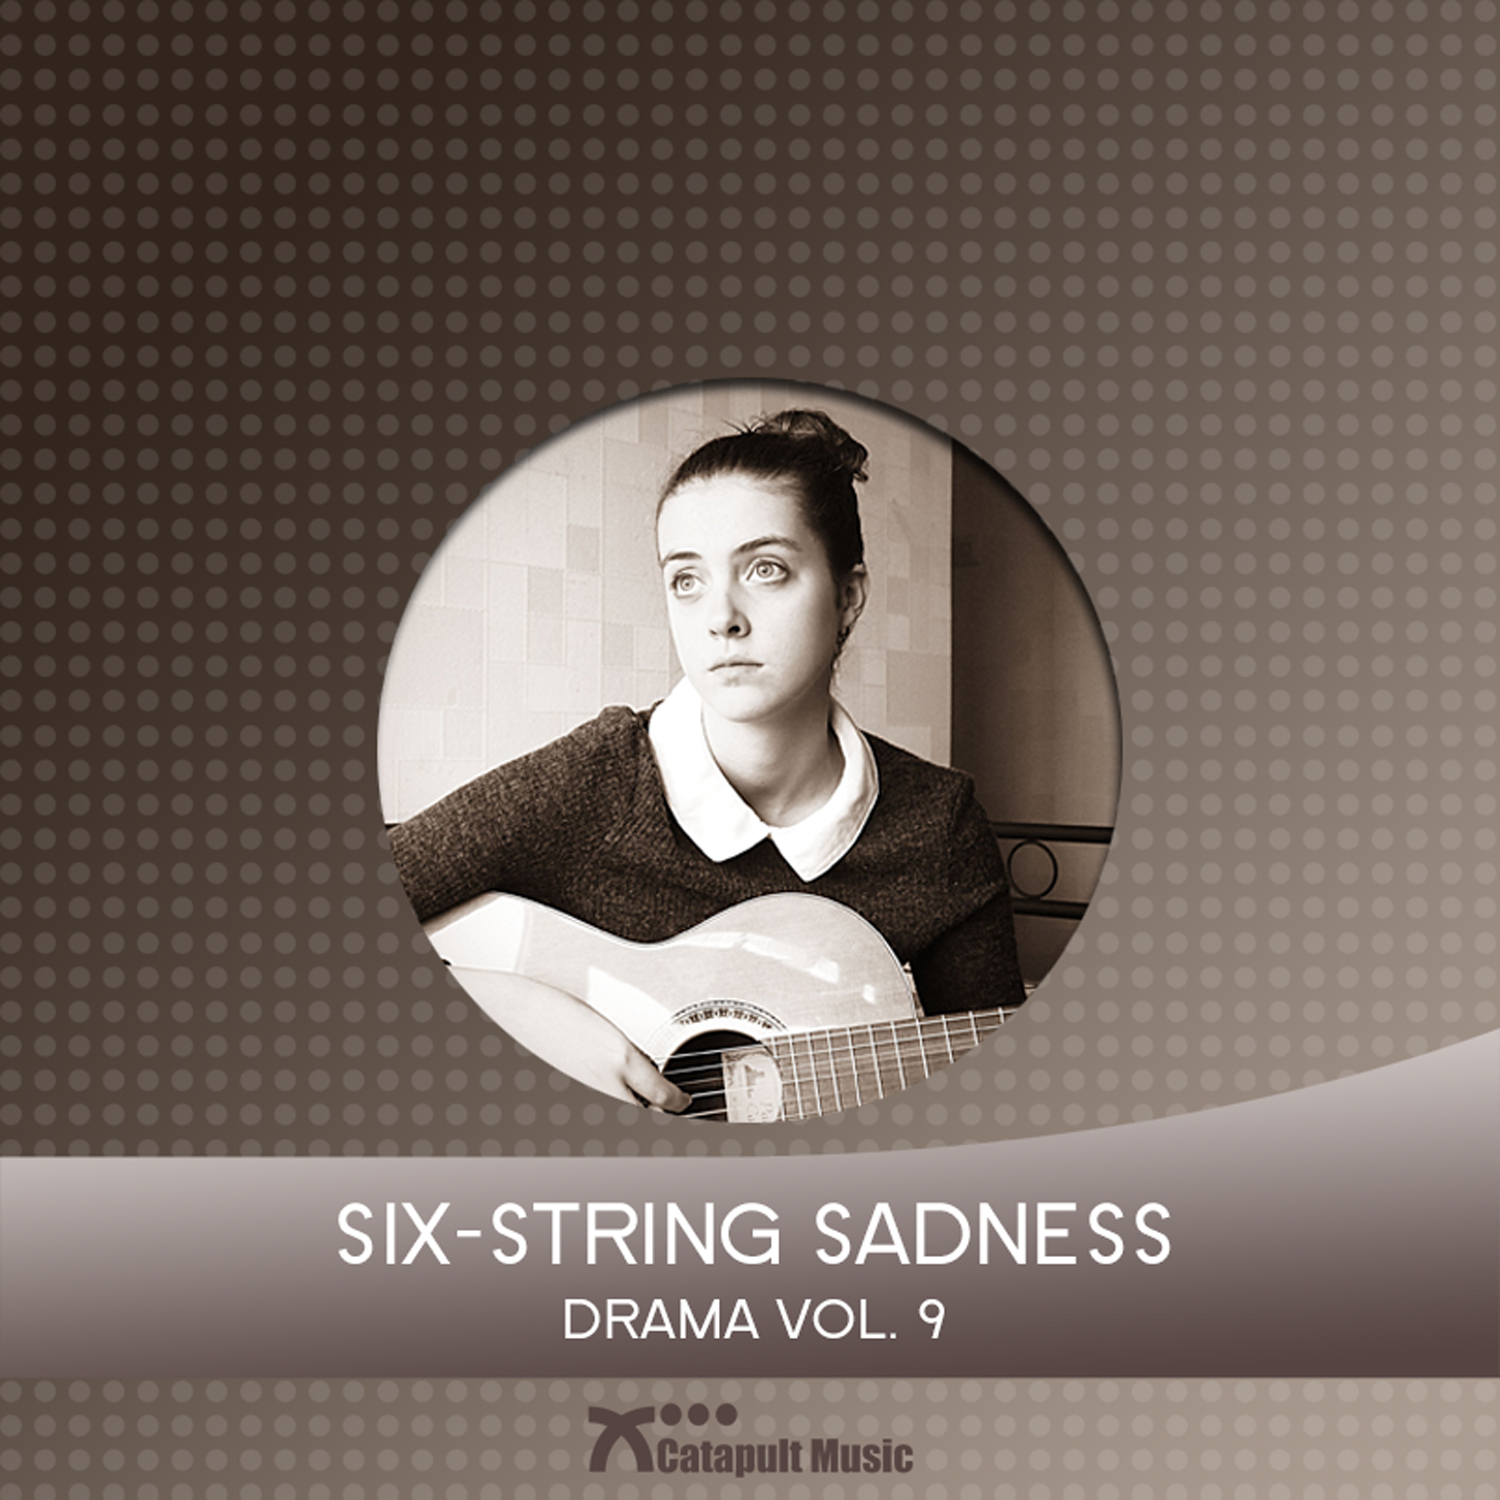 Six-String Sadness